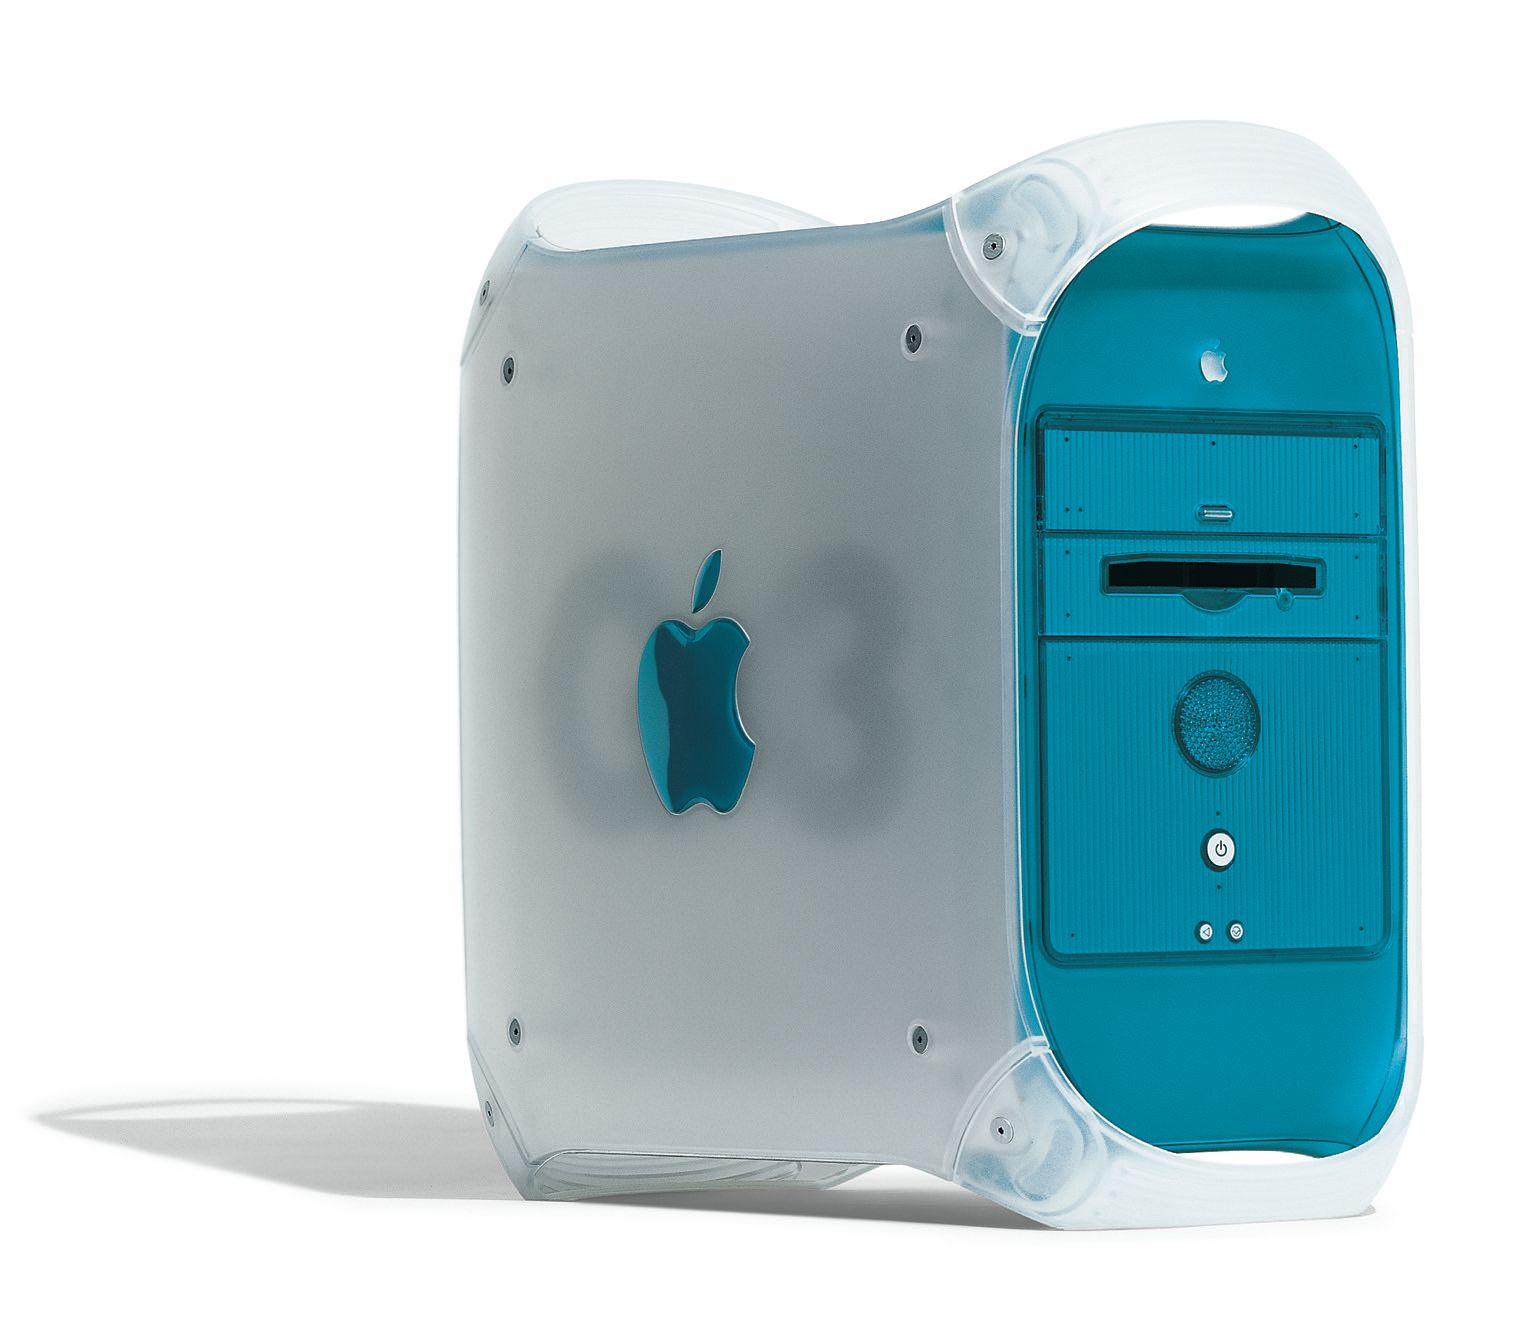 Power Mac G3 Blue and White